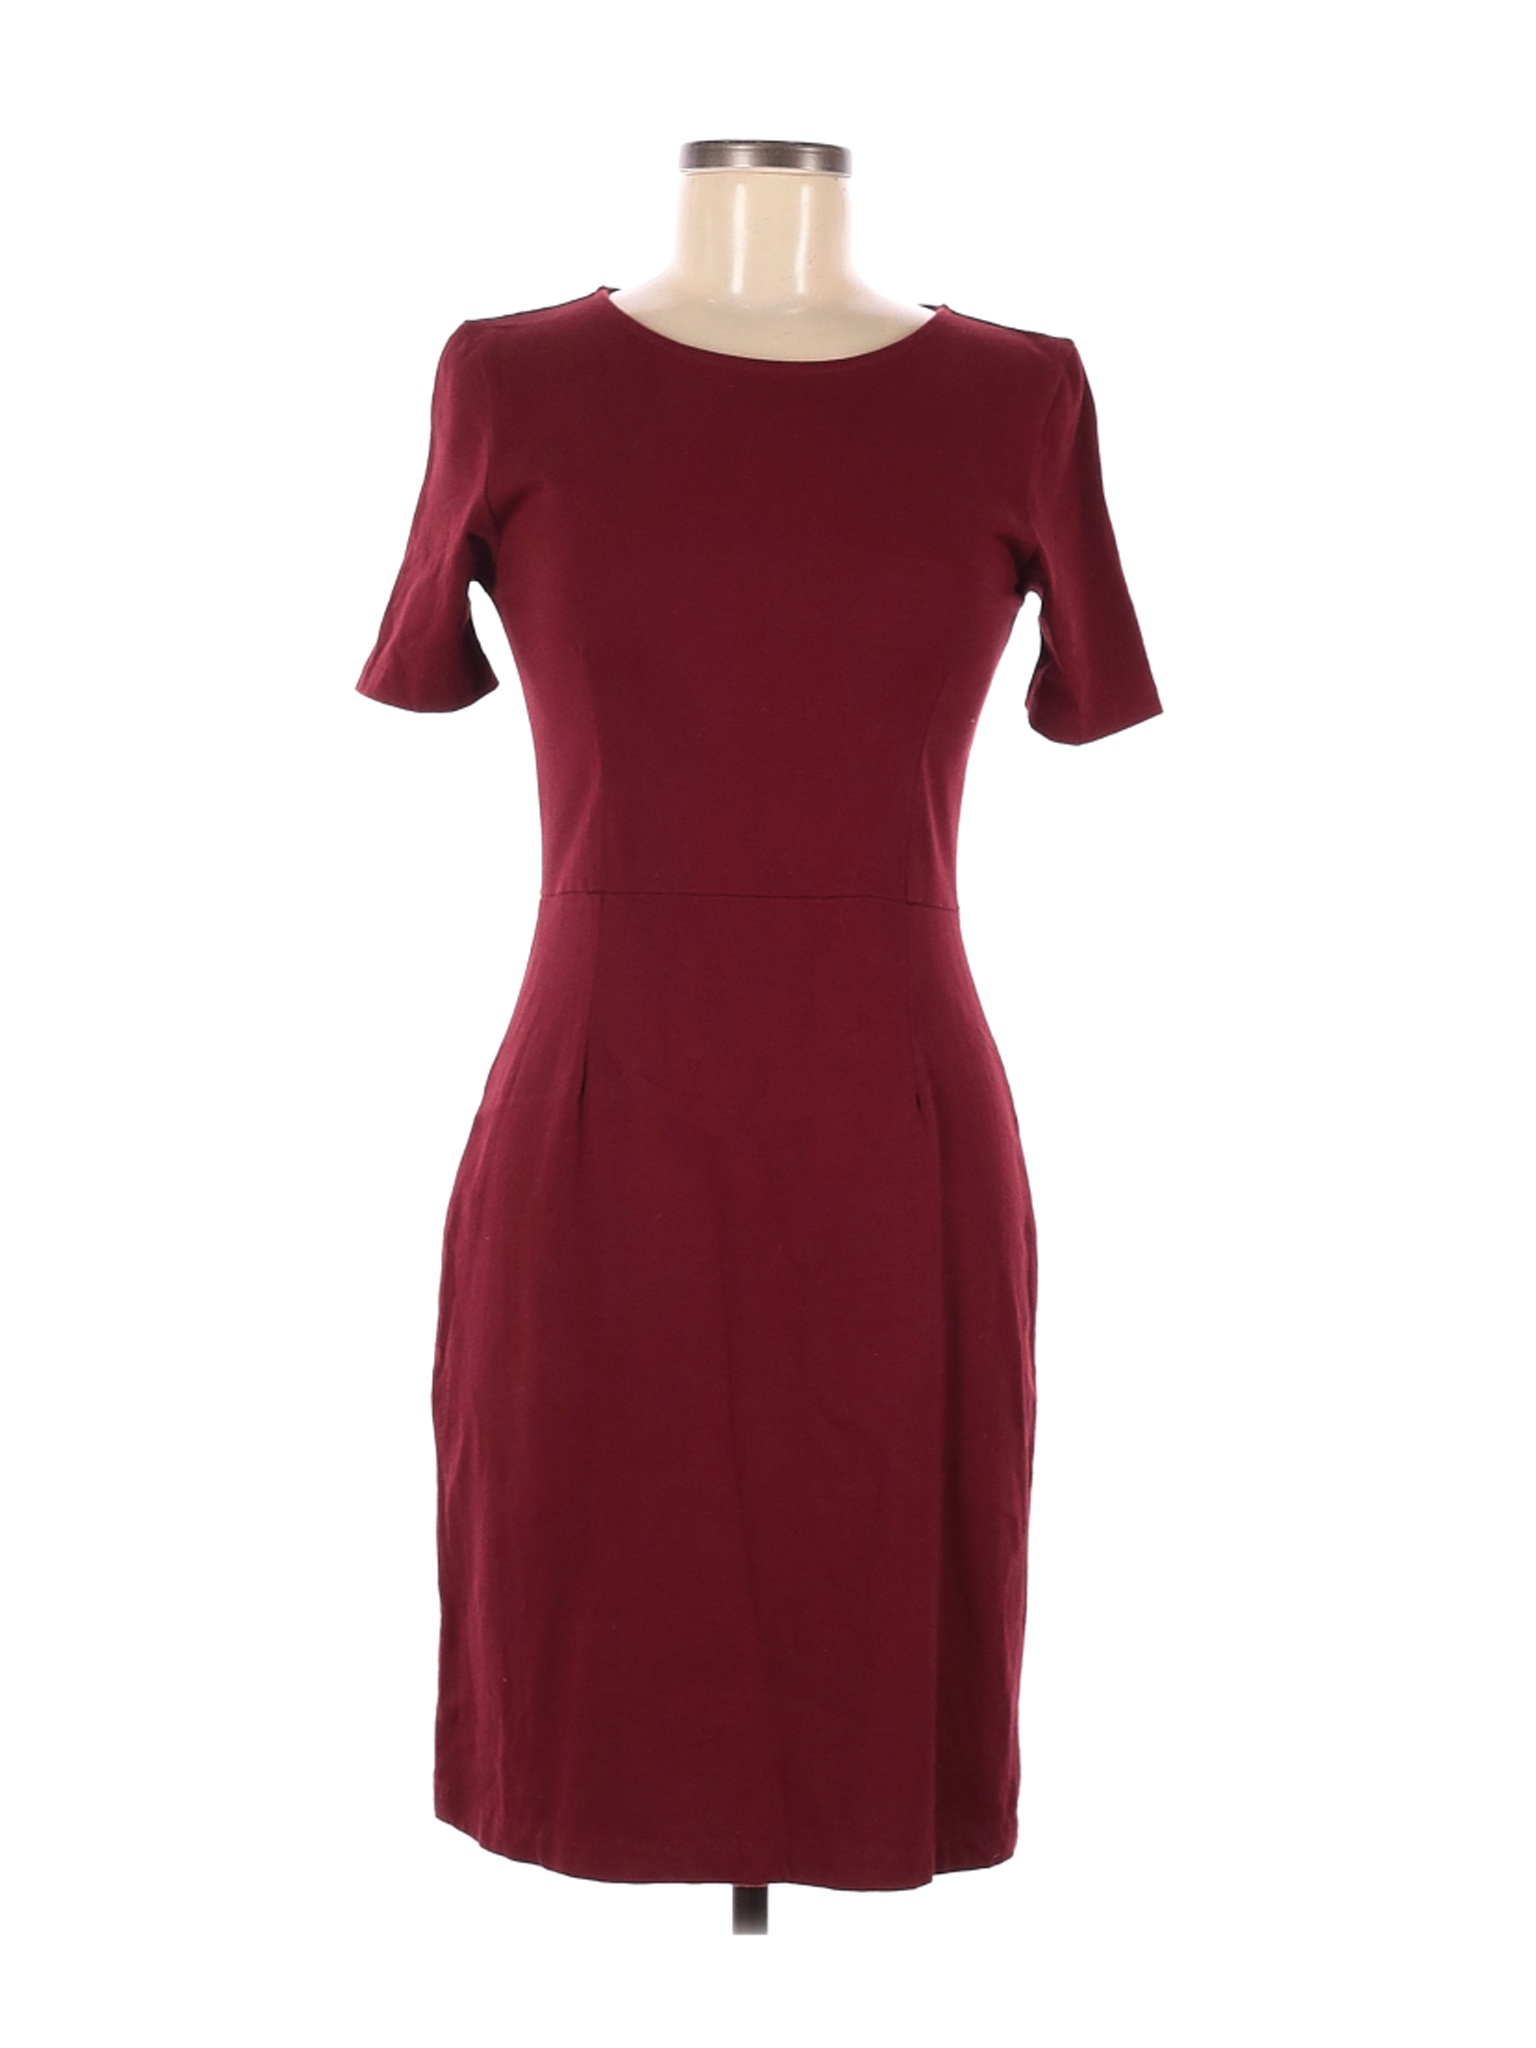 J.Crew Women Red Casual Dress 4 | eBay